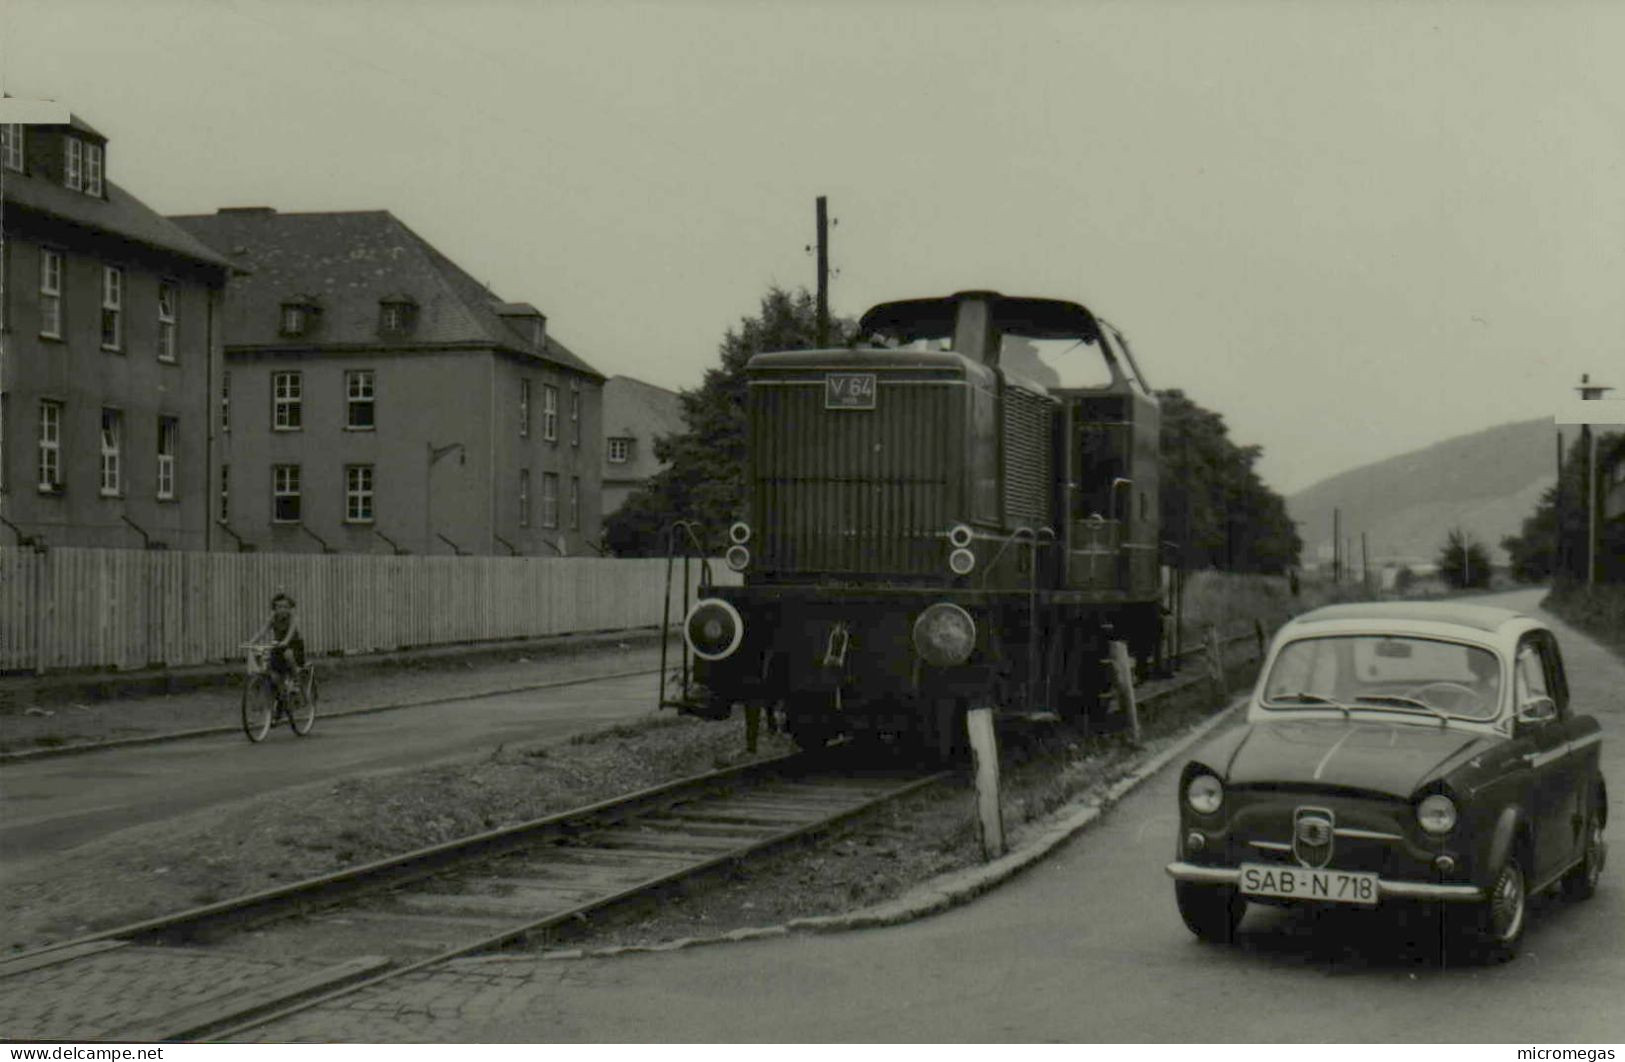 Reproduction - Moselbahn V 64, 1-8-1967 - Trains